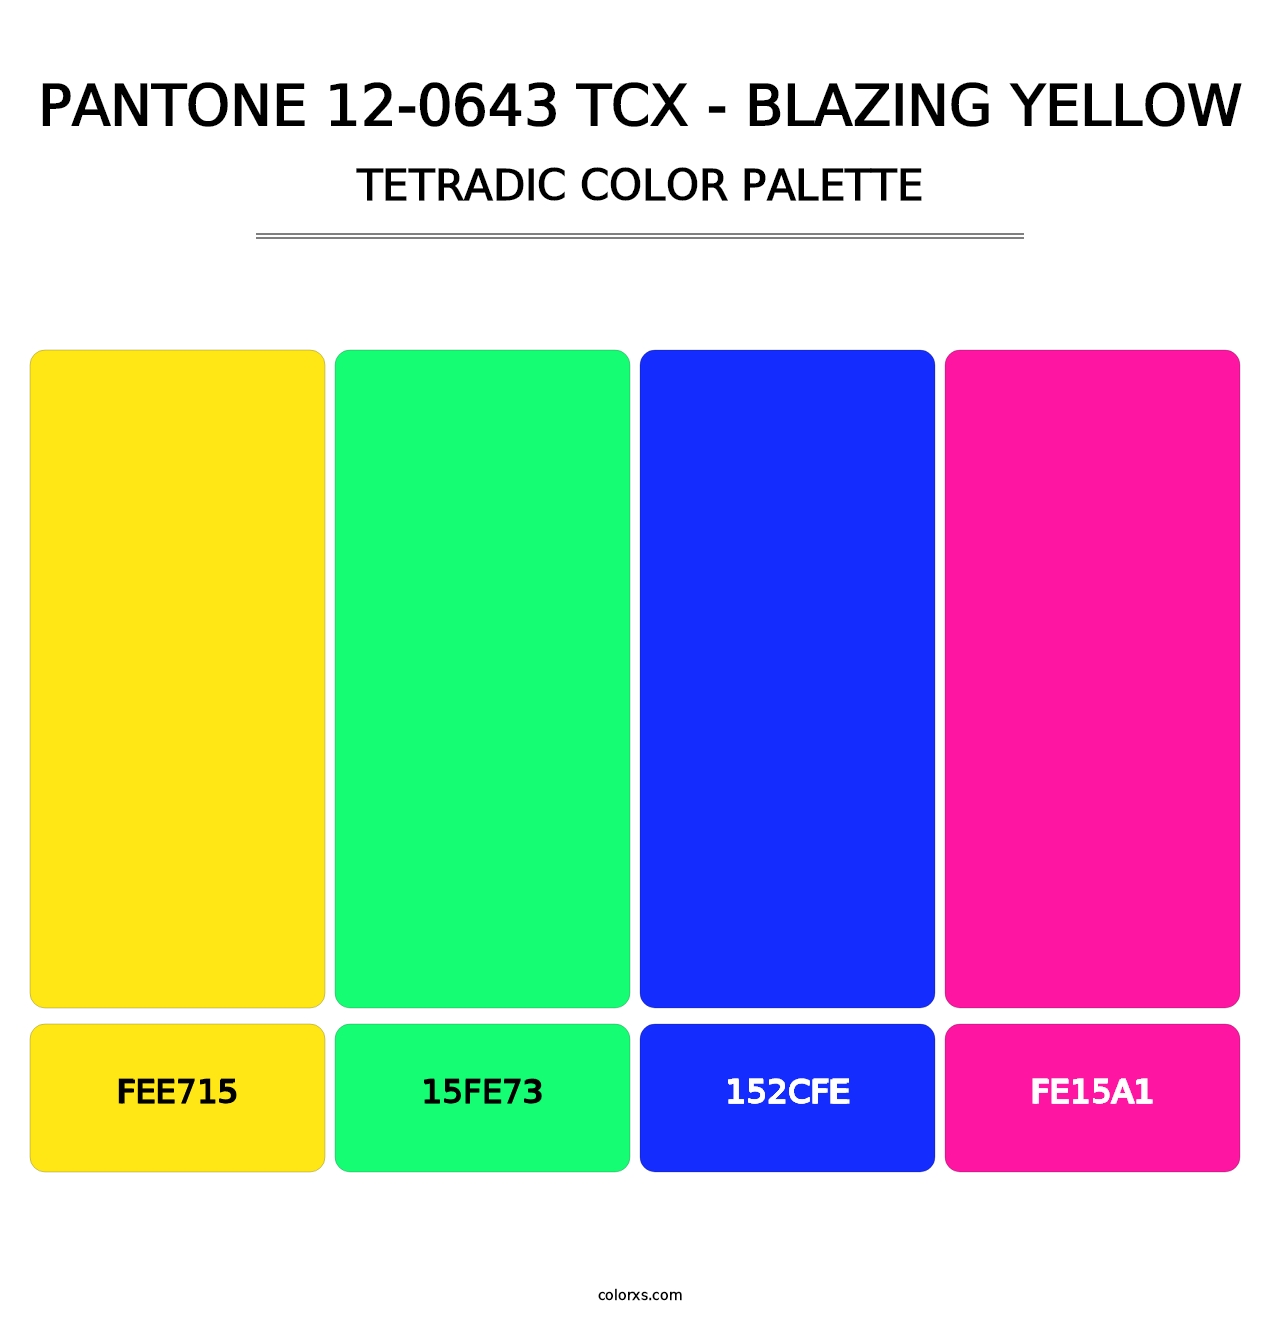 PANTONE 12-0643 TCX - Blazing Yellow - Tetradic Color Palette